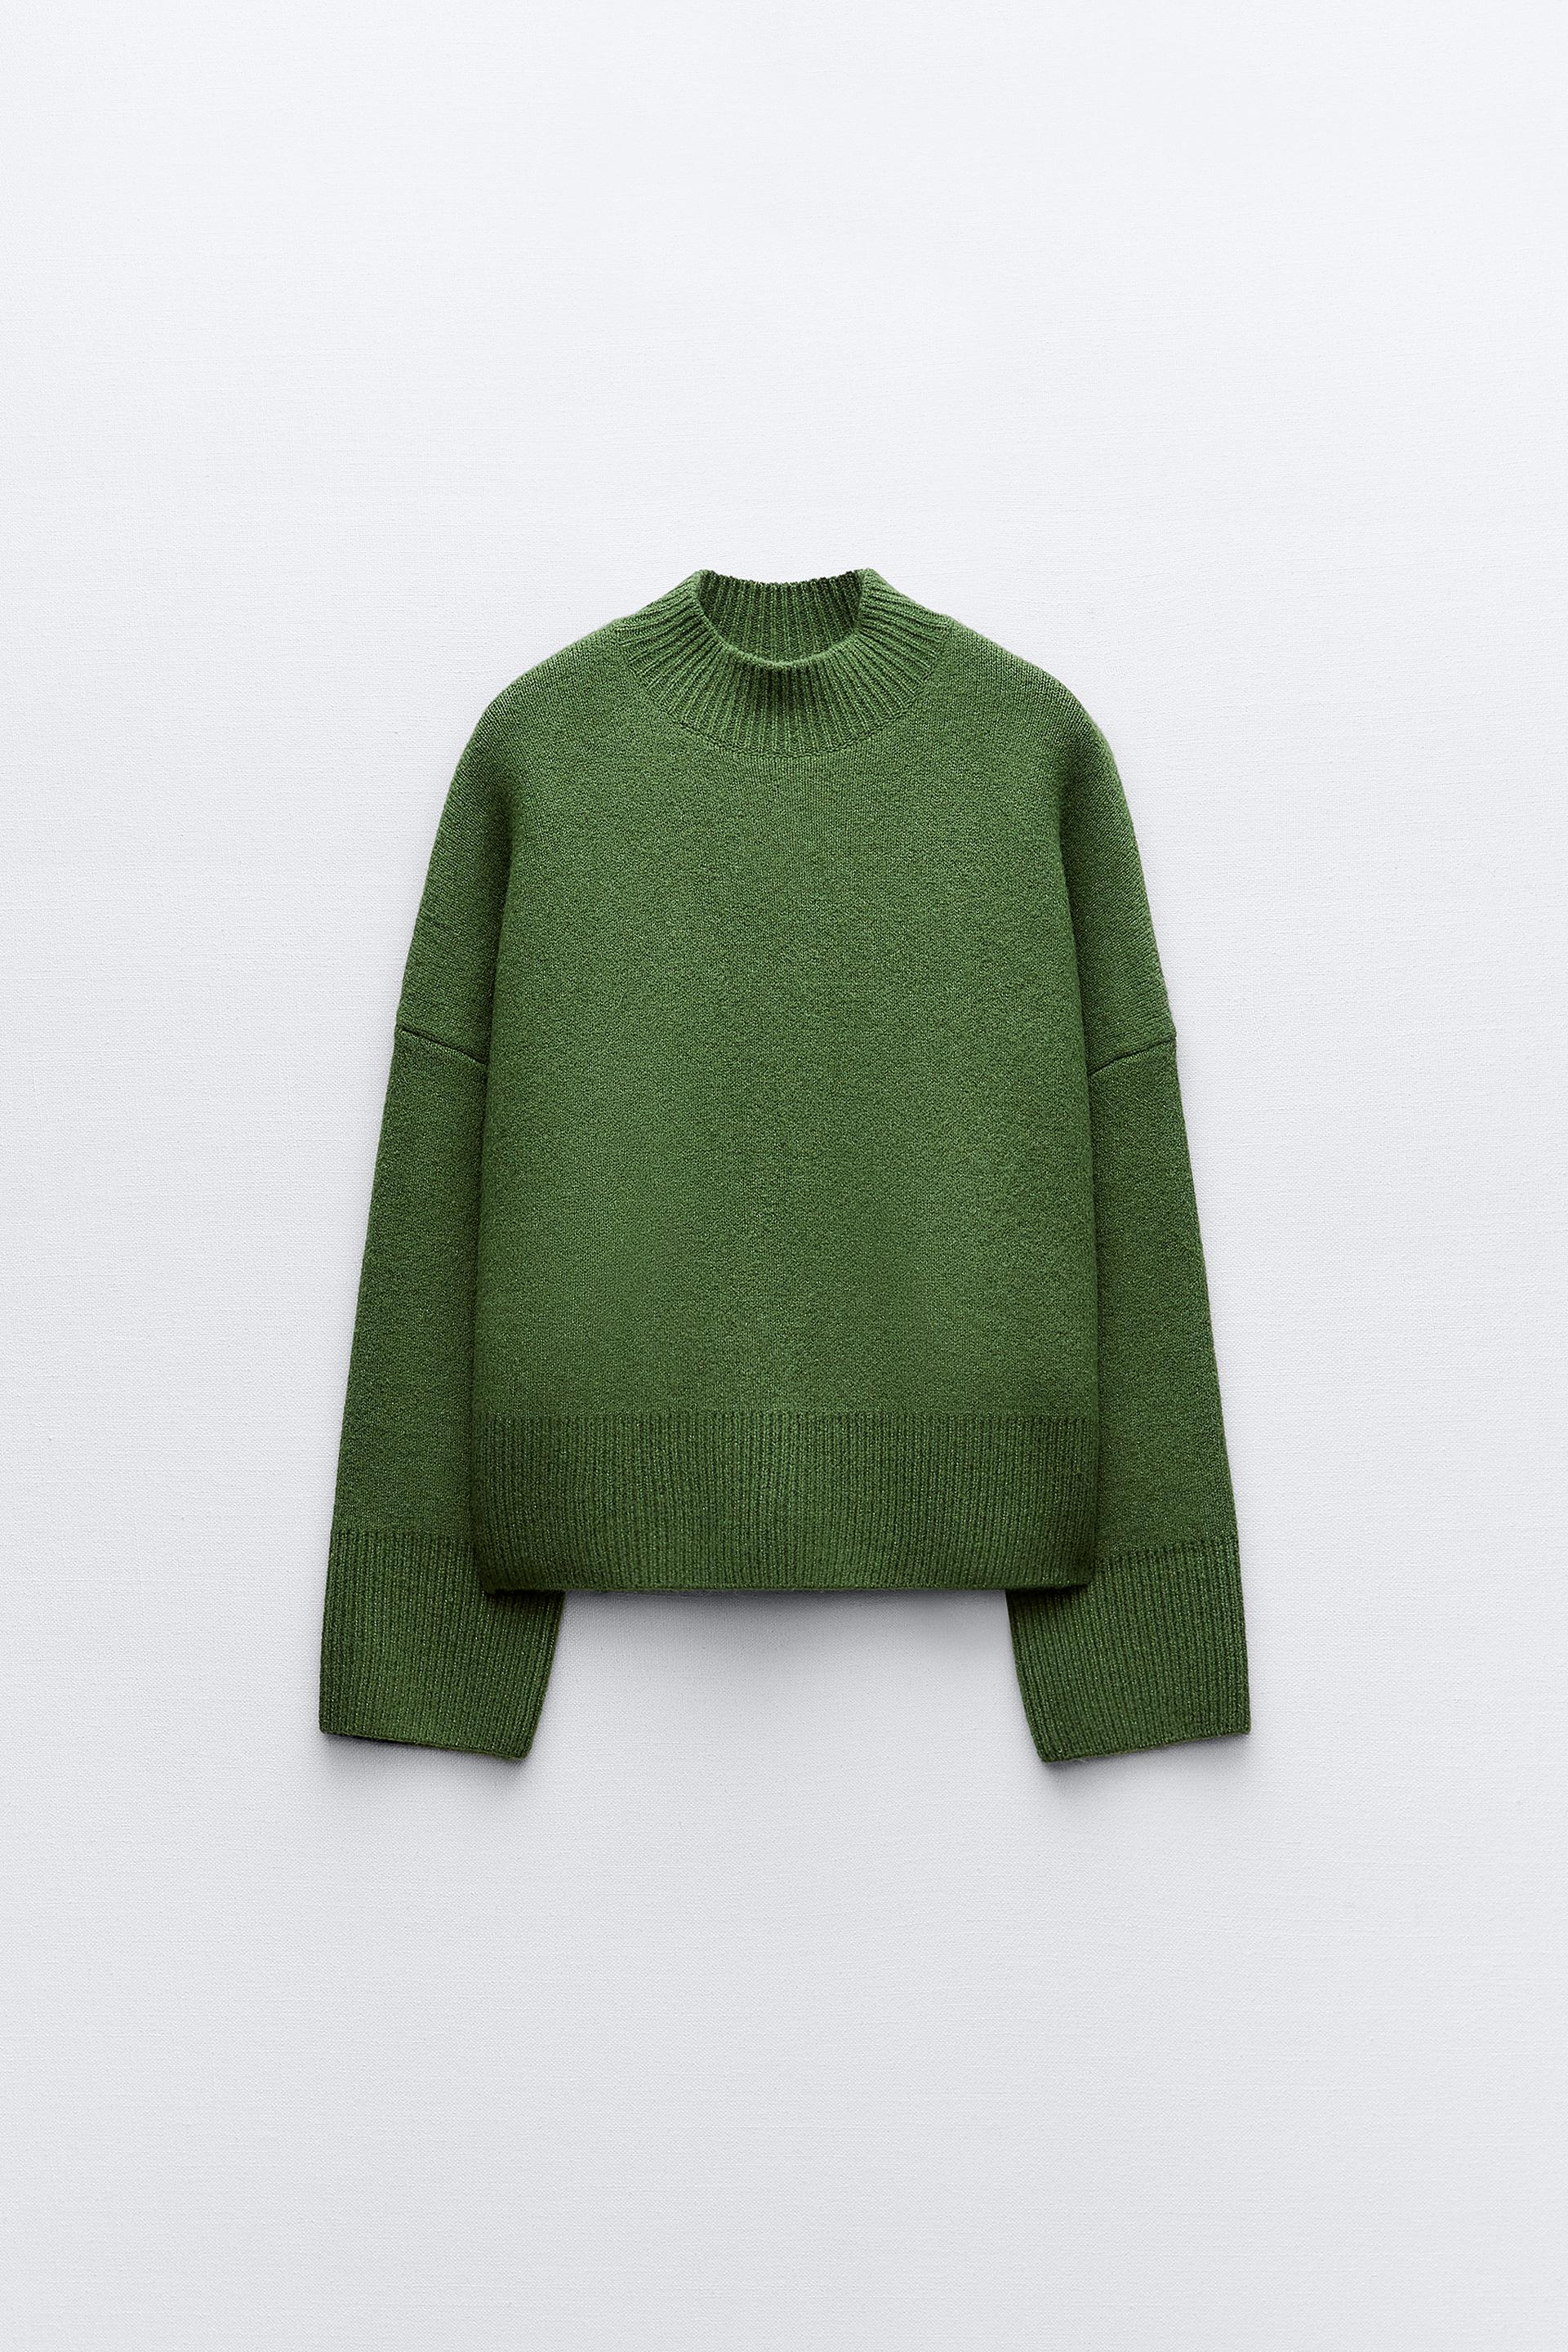 Zara Green Ribbed Knit Top, RegalFille